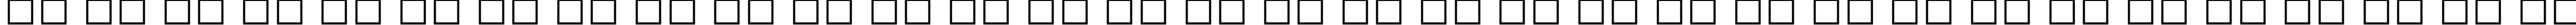 Пример написания русского алфавита шрифтом Gill Sans Ultra Bold Condensed